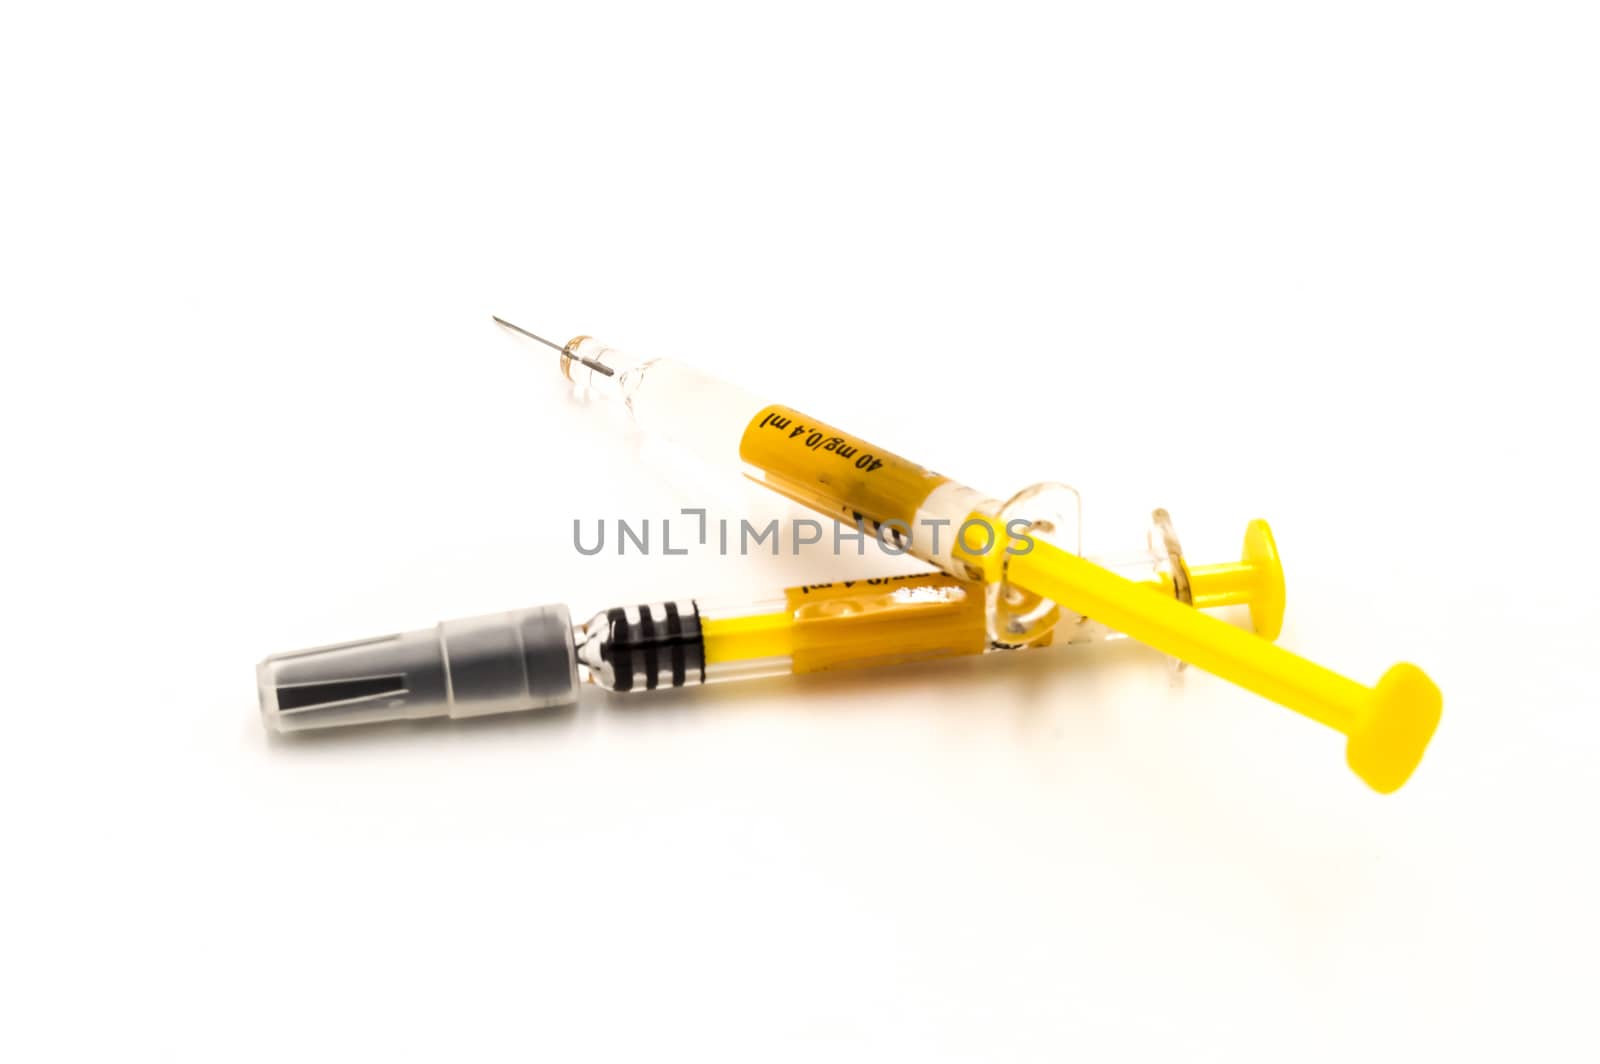 Two syringes close up isolated on white background